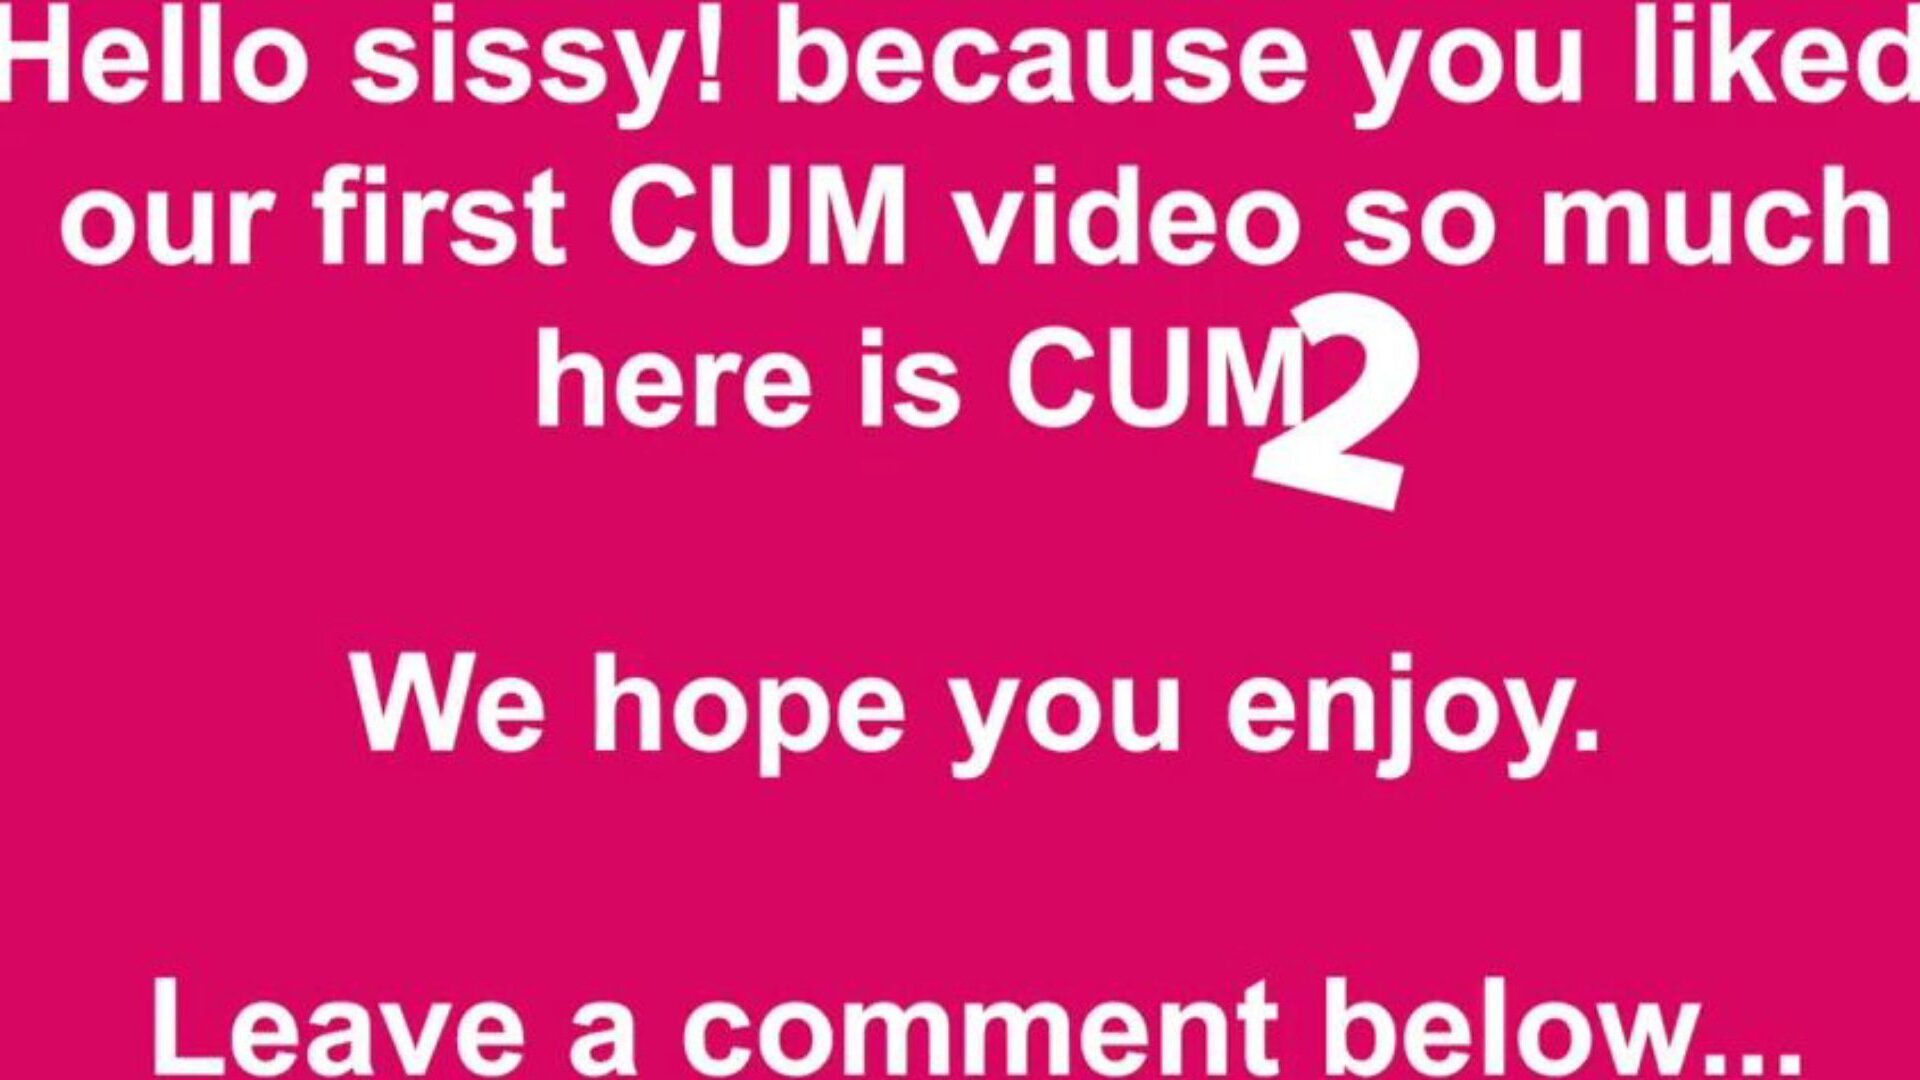 cum two free cum & cumming tube porn video 49 - xhamster mira el video cum two tube fuck-a-thon gratis en xhamster, con la colección imperiosa de cumming tube & tube 2 episodios de películas porno hd gratis